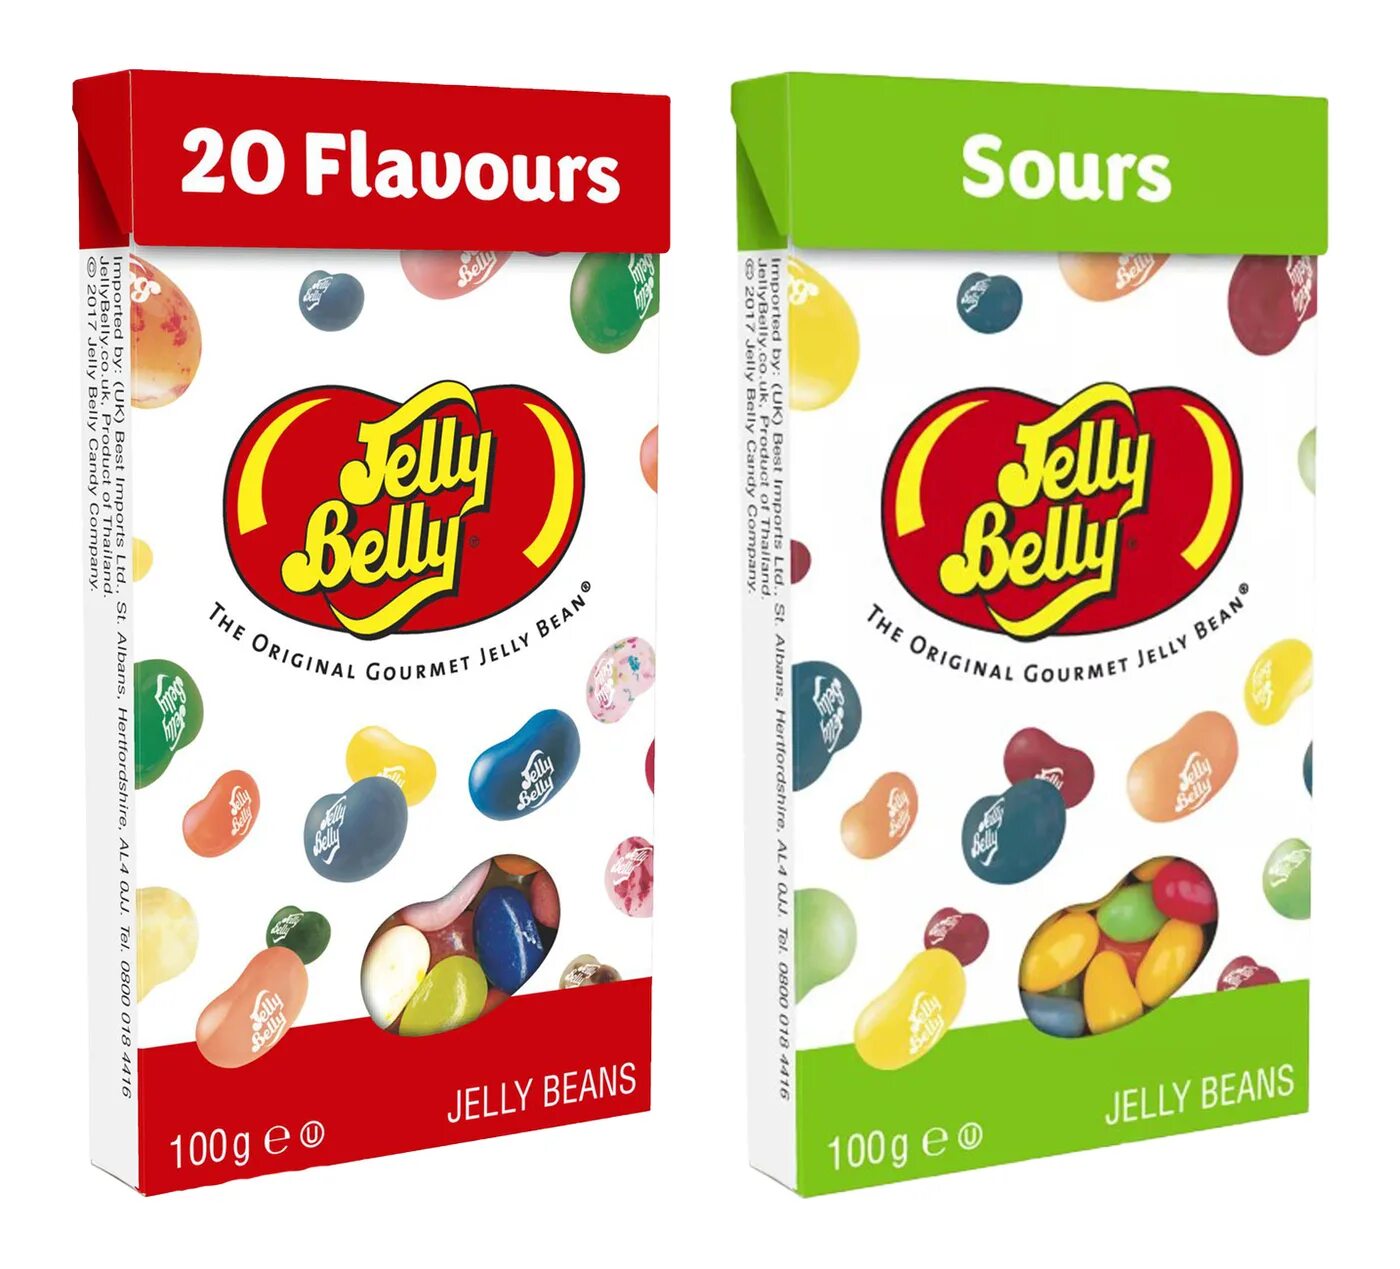 Конфеты Jelly belly. Конфеты Джелли Белли вкусы. Jelly belly 20 flavors вкусы. Jelly belly Sours 35 гр.